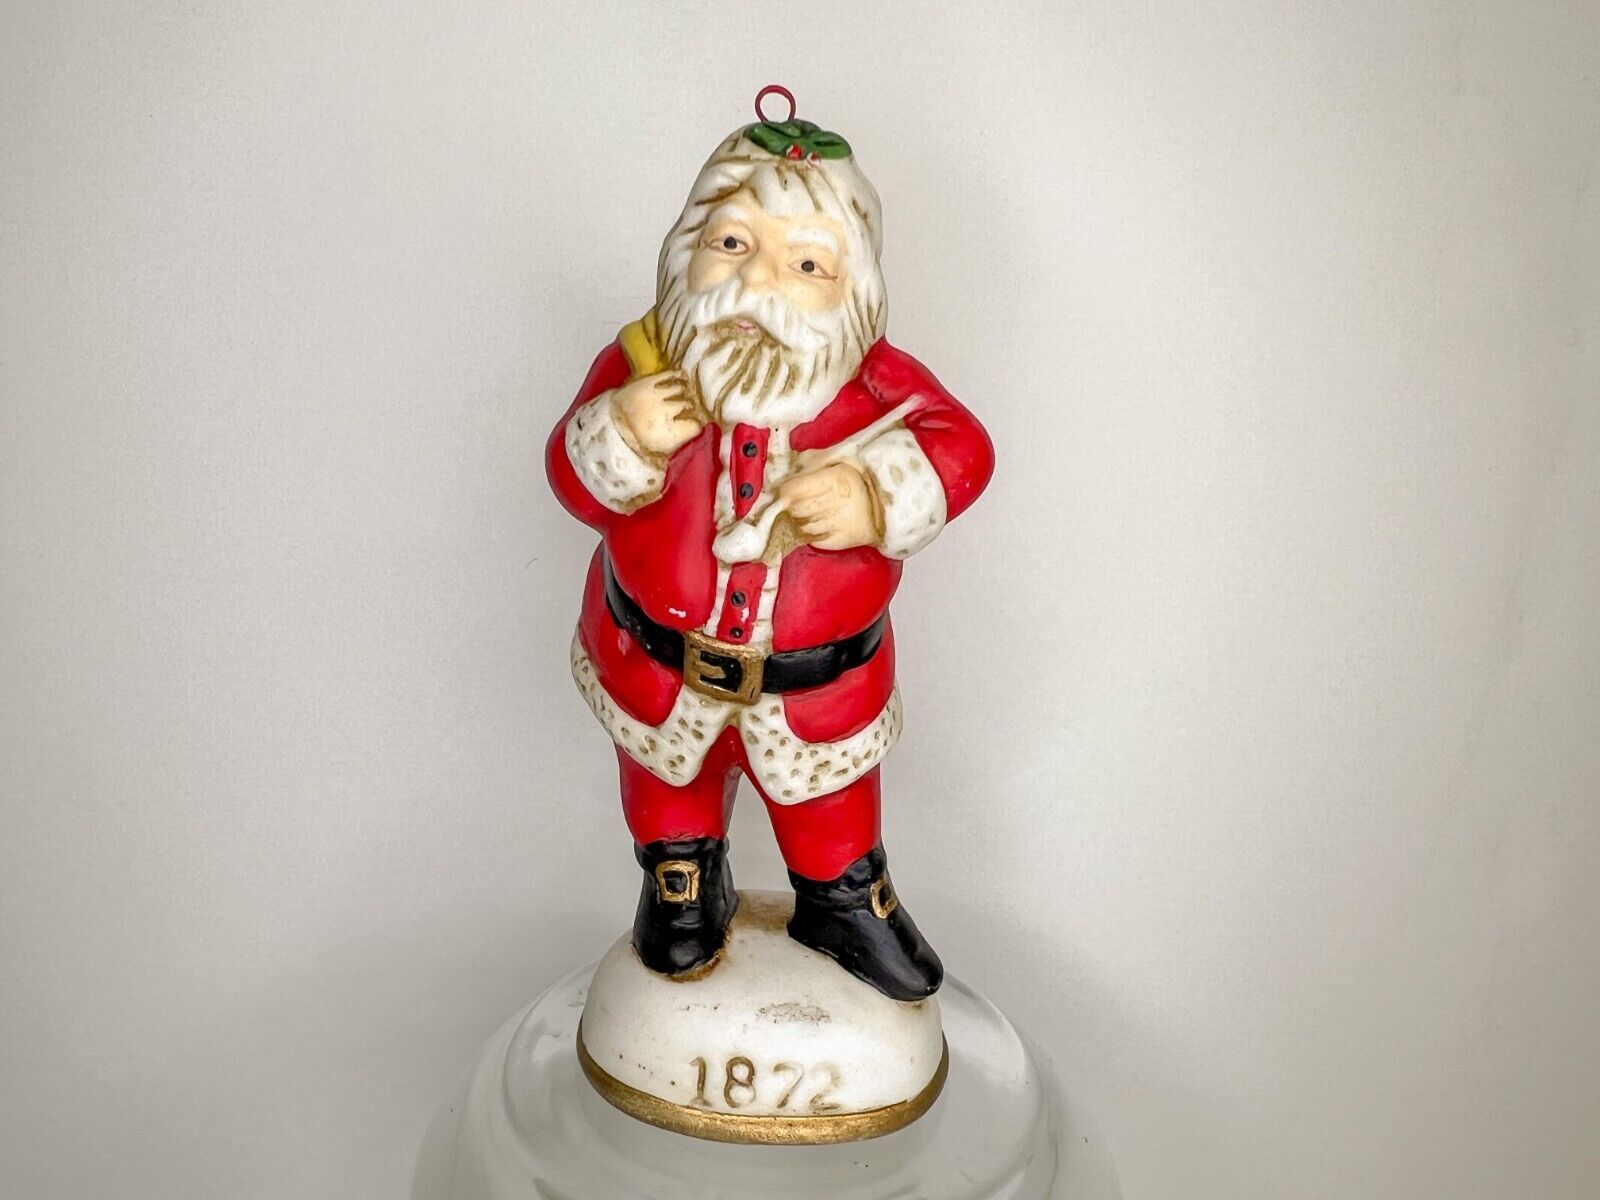 Santa Claus 1872 Ceramic Ornament Santa Christmas 